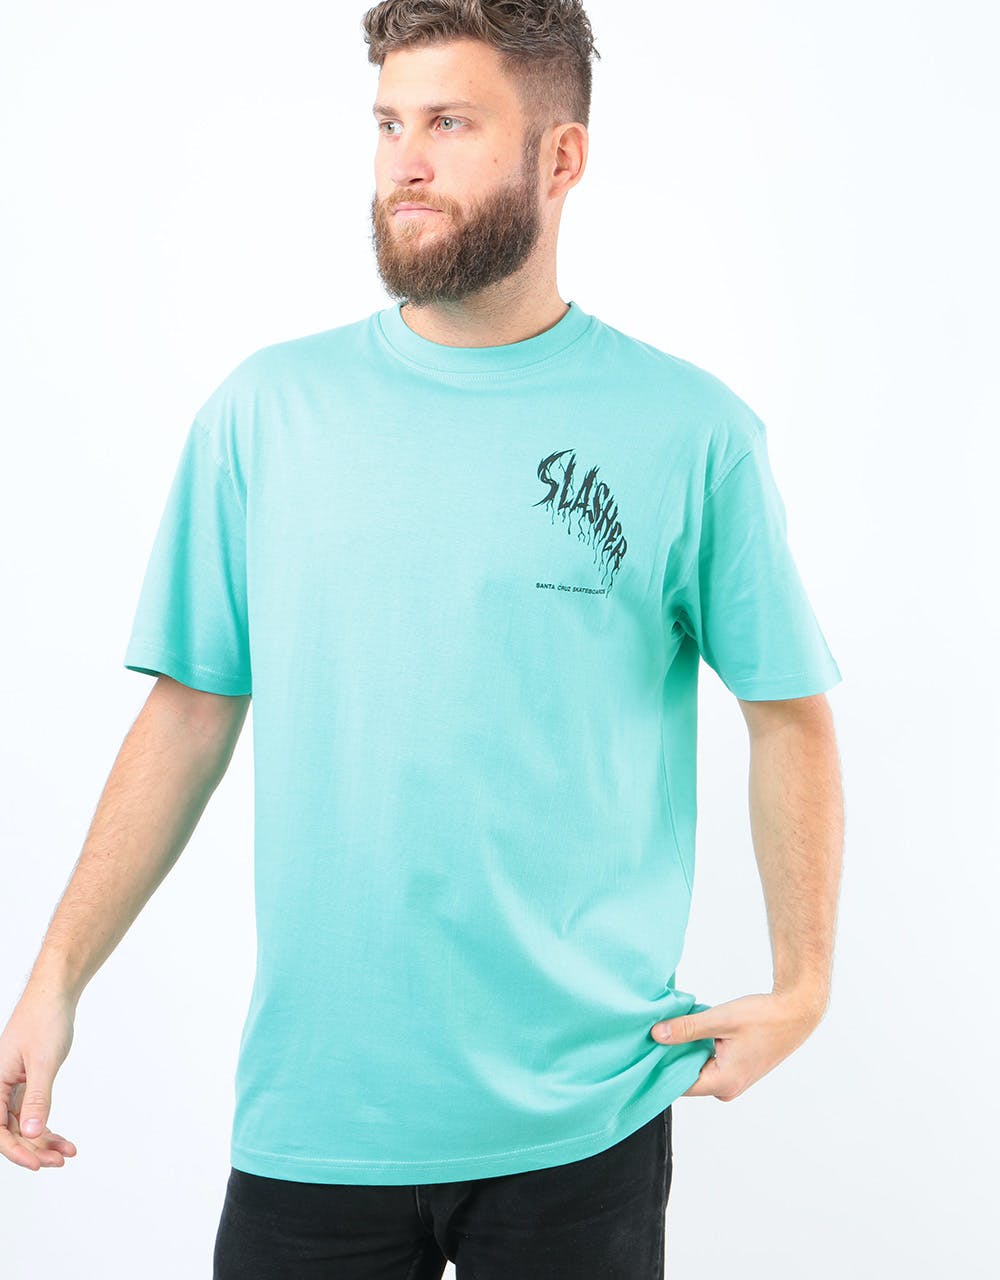 Santa Cruz Wave Slasher OGSC T-Shirt - Spearmint